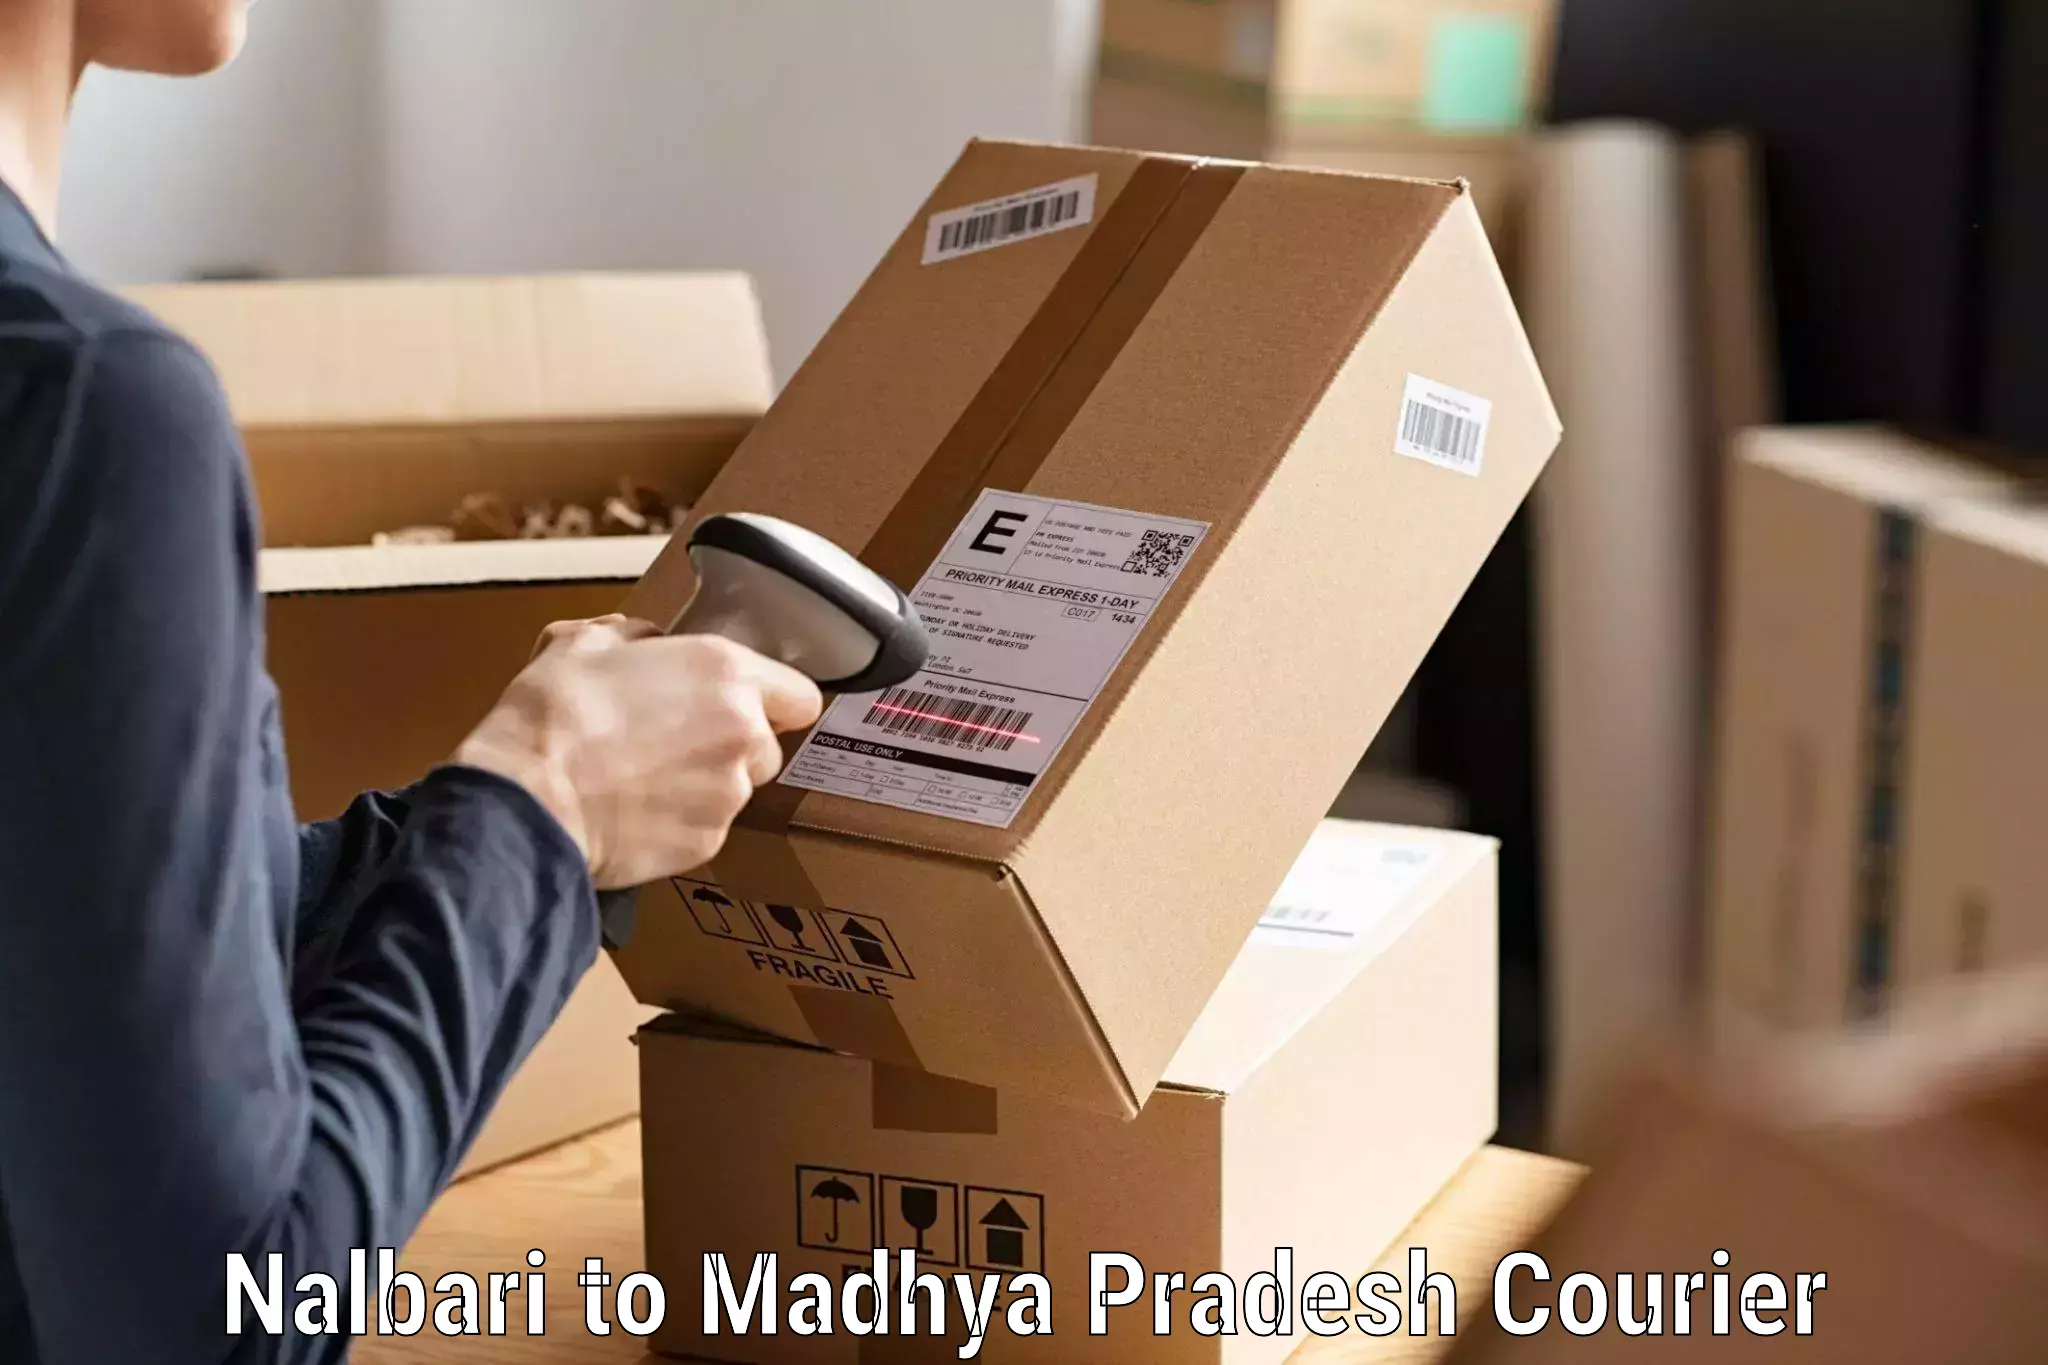 Custom courier packaging in Nalbari to Burhar